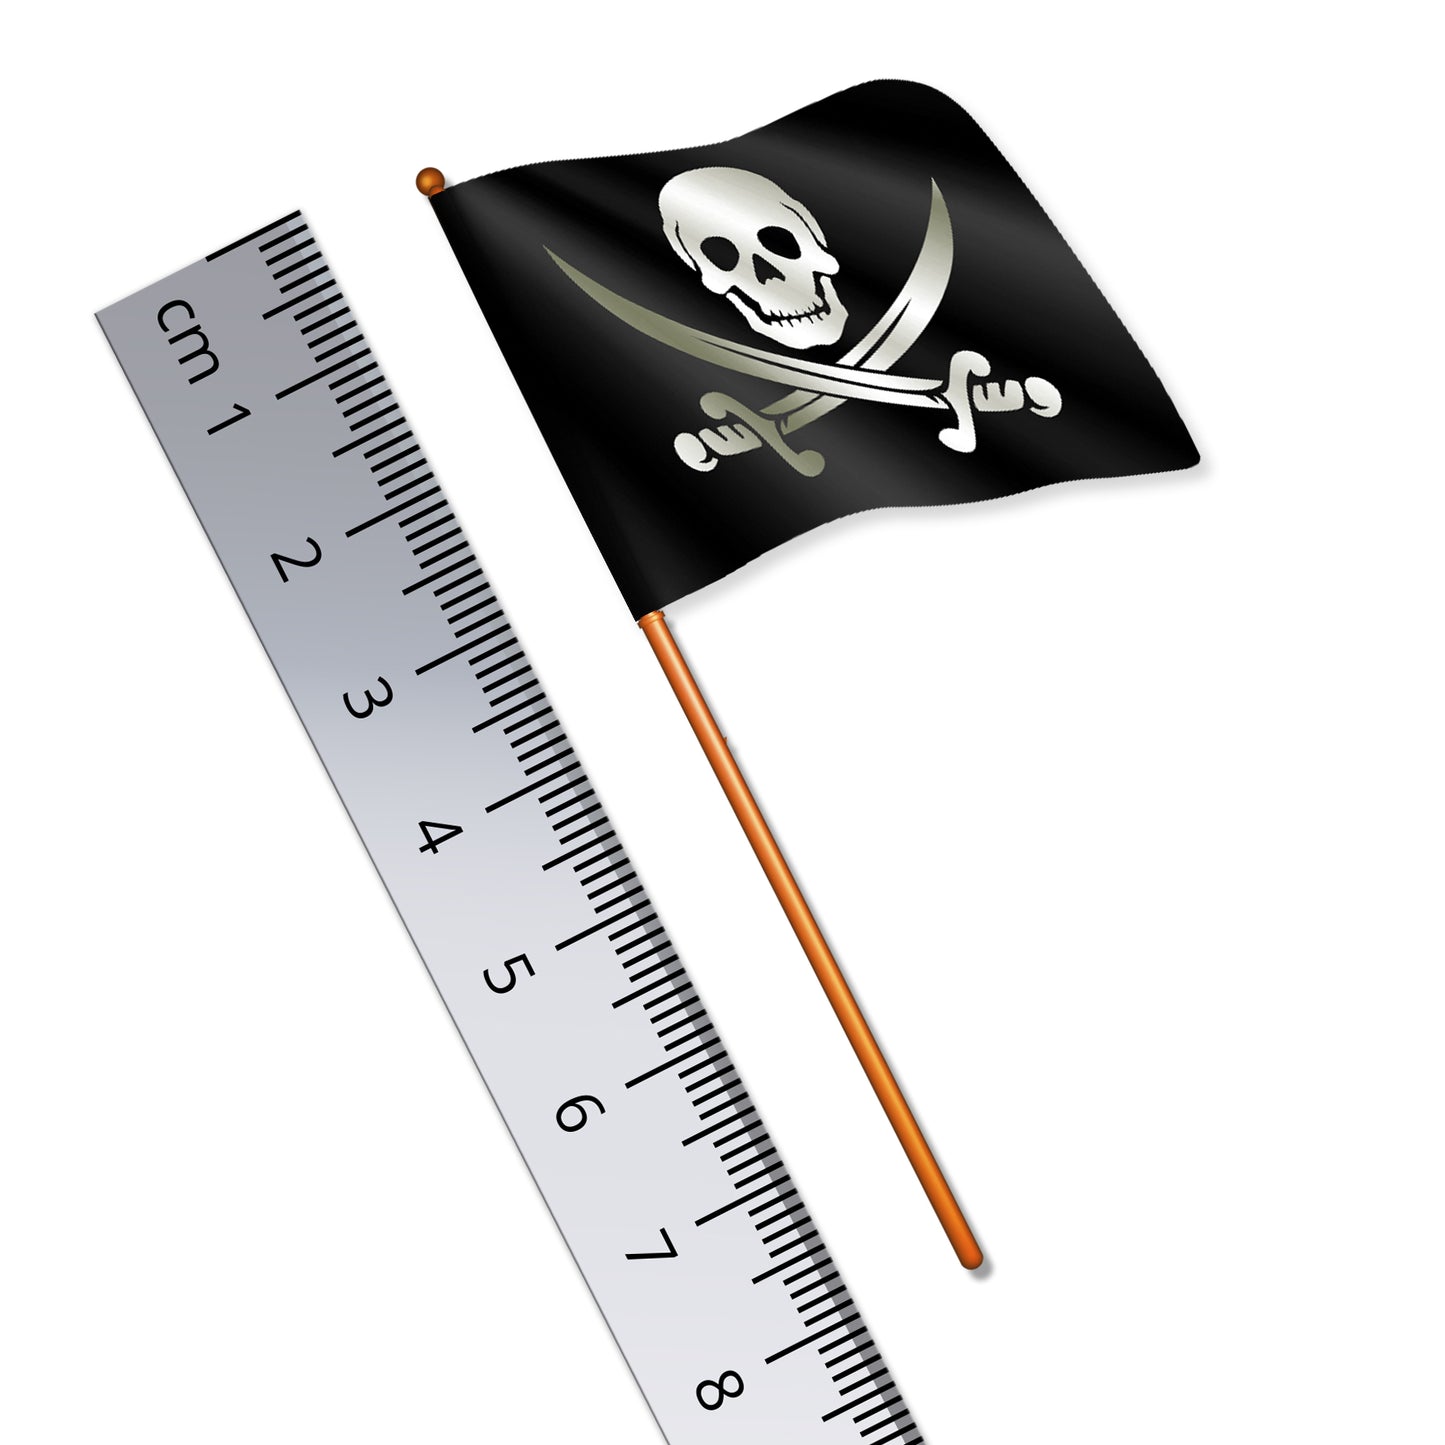 Pirate Flag (Calico Jack)